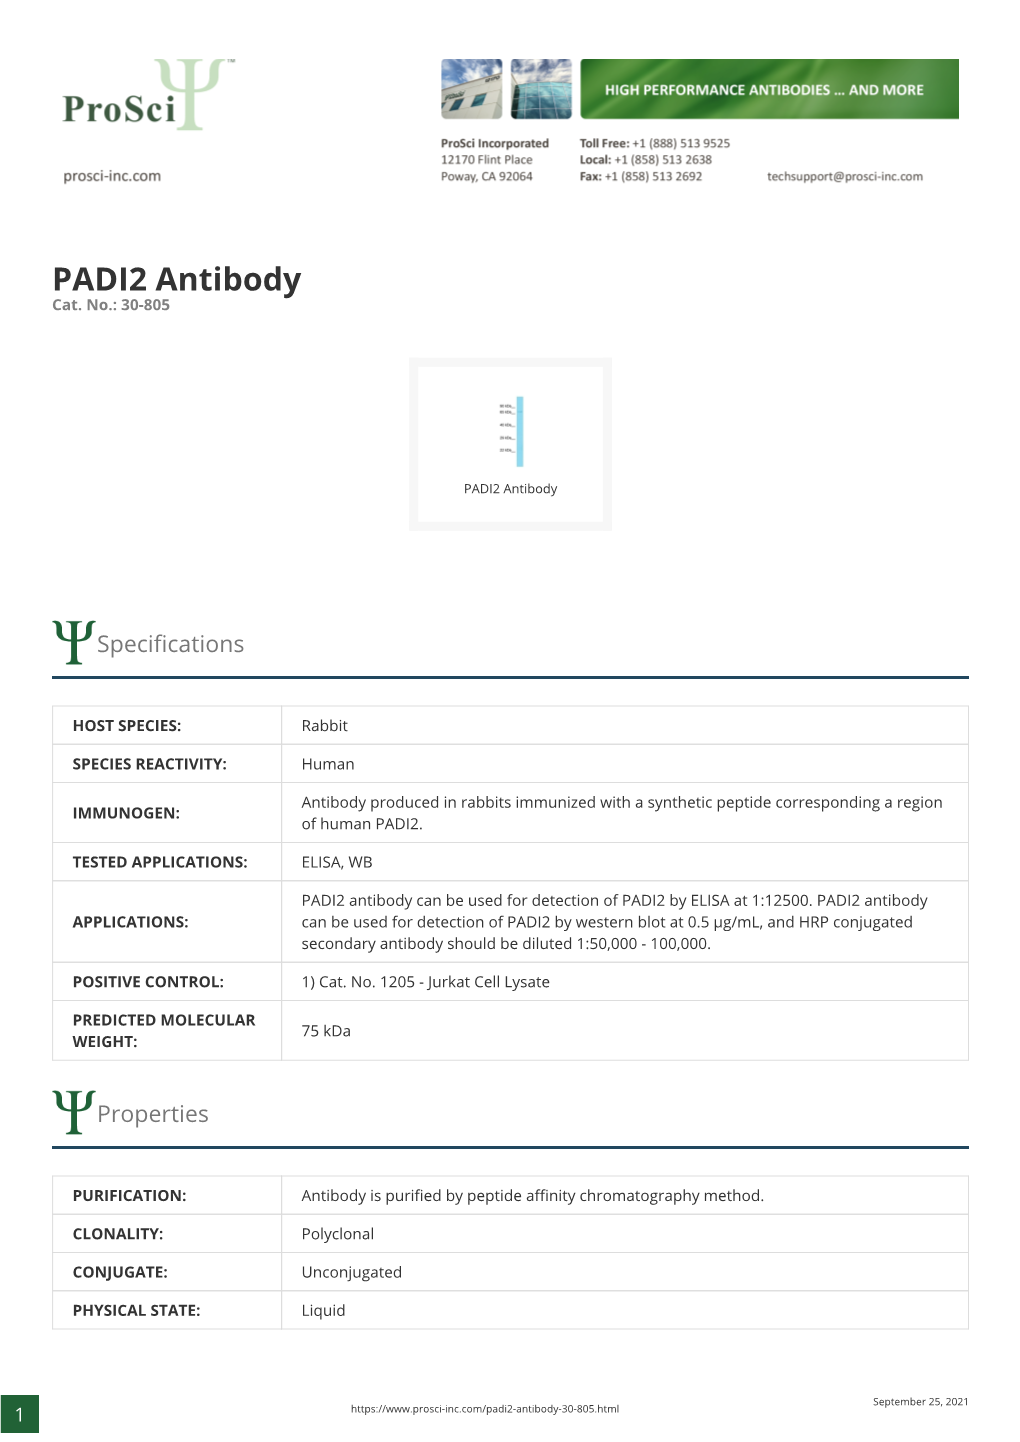 PADI2 Antibody Cat